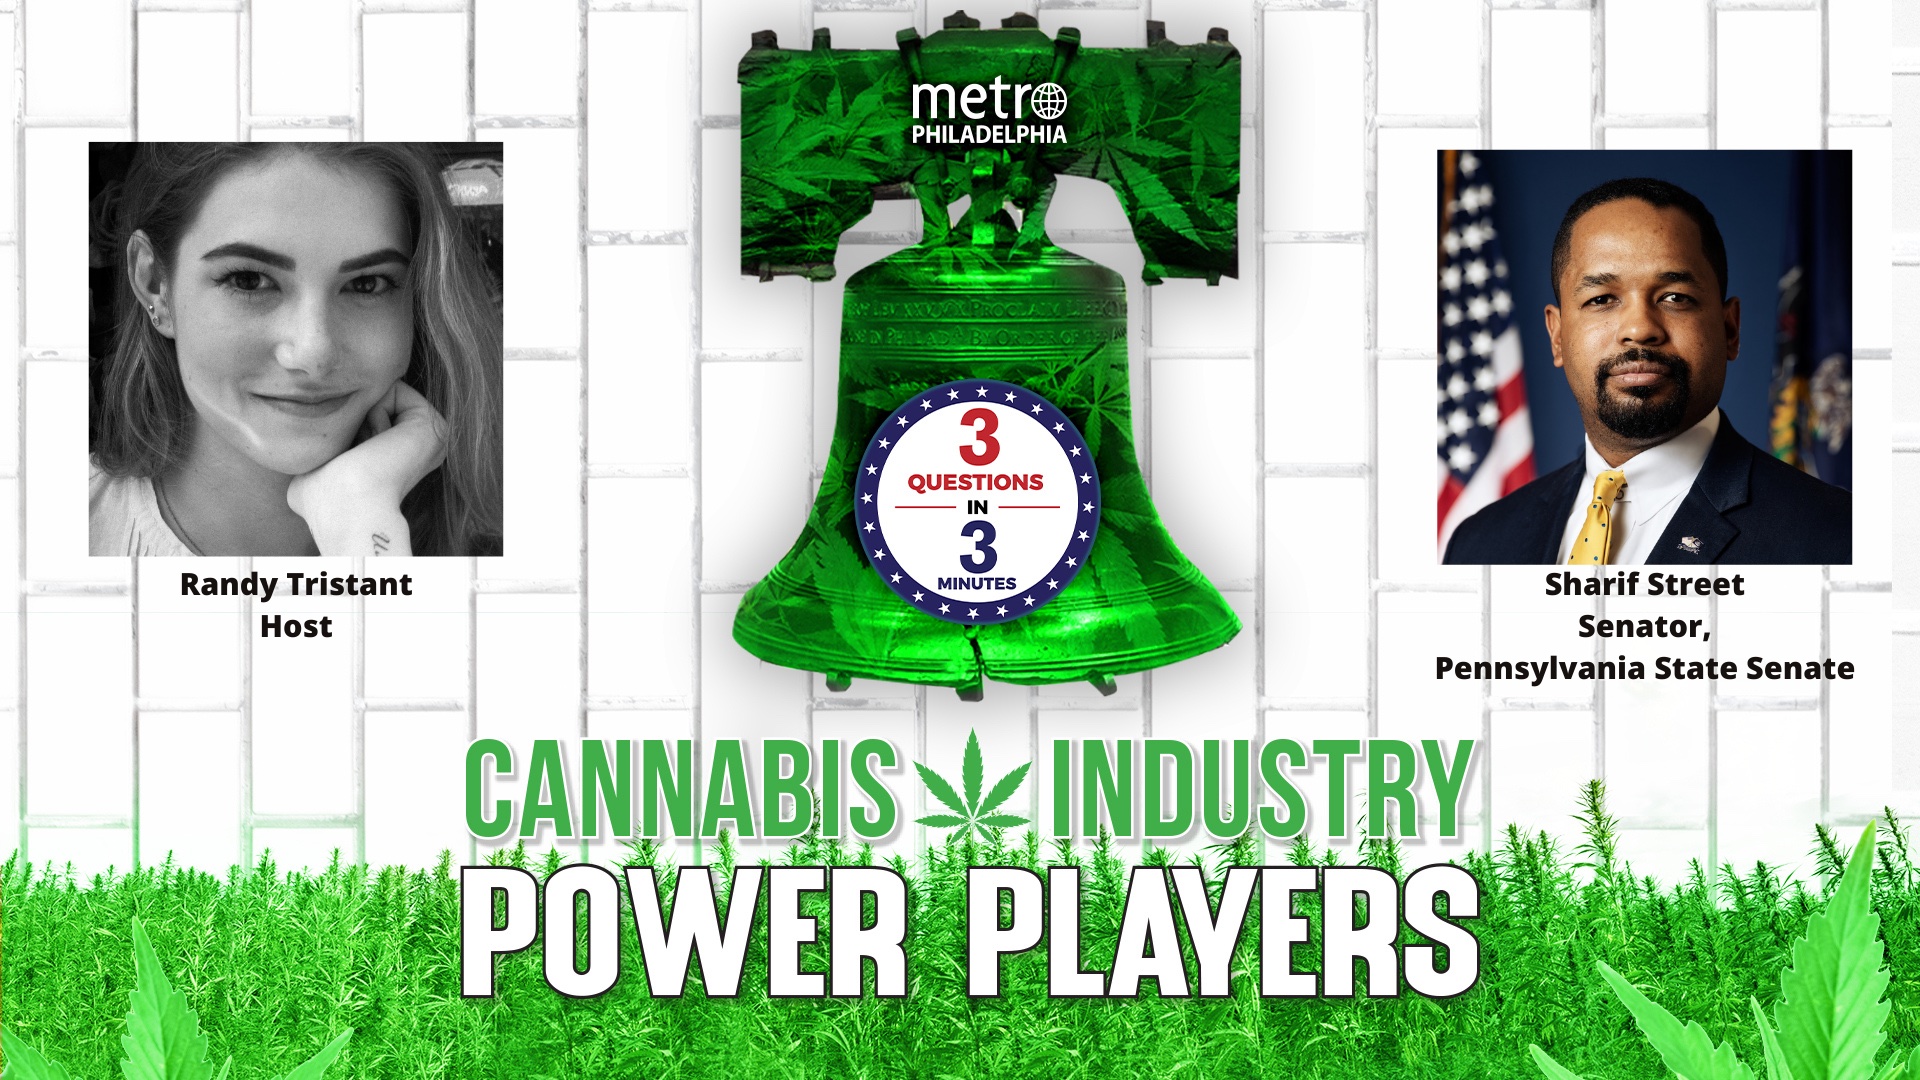 Cannabis Industry Power Players – Senator Sharif Street, Pennsylvania ...